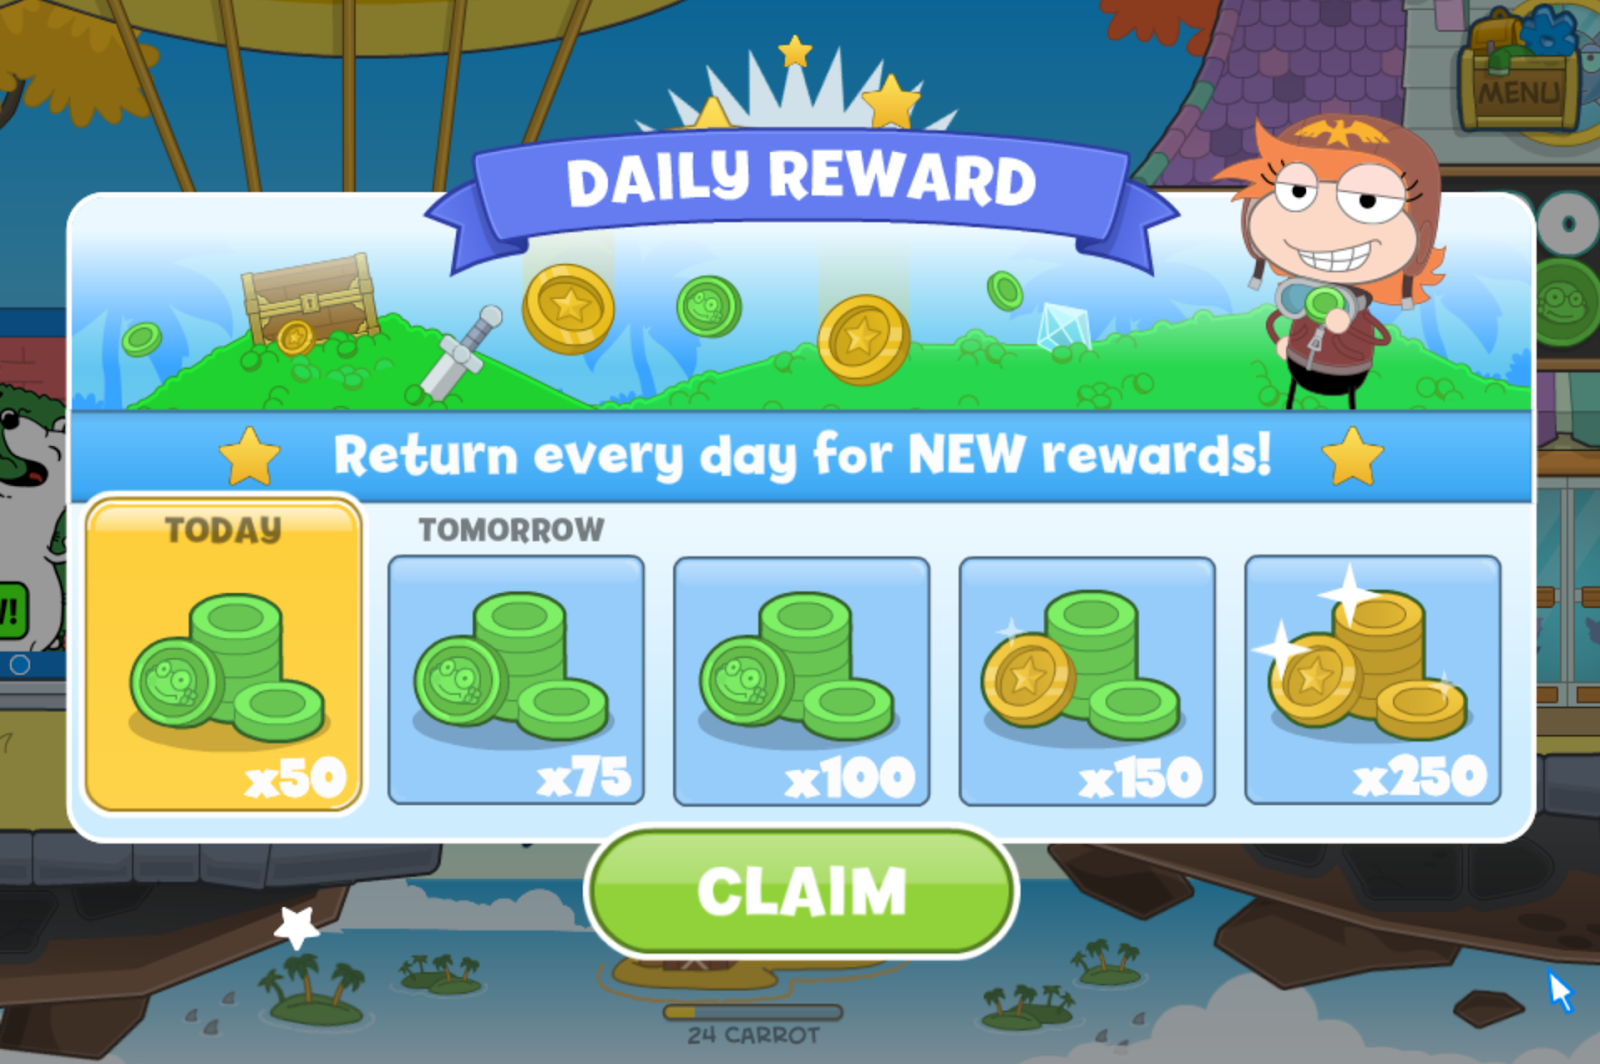 Investing daily login rewards vest period